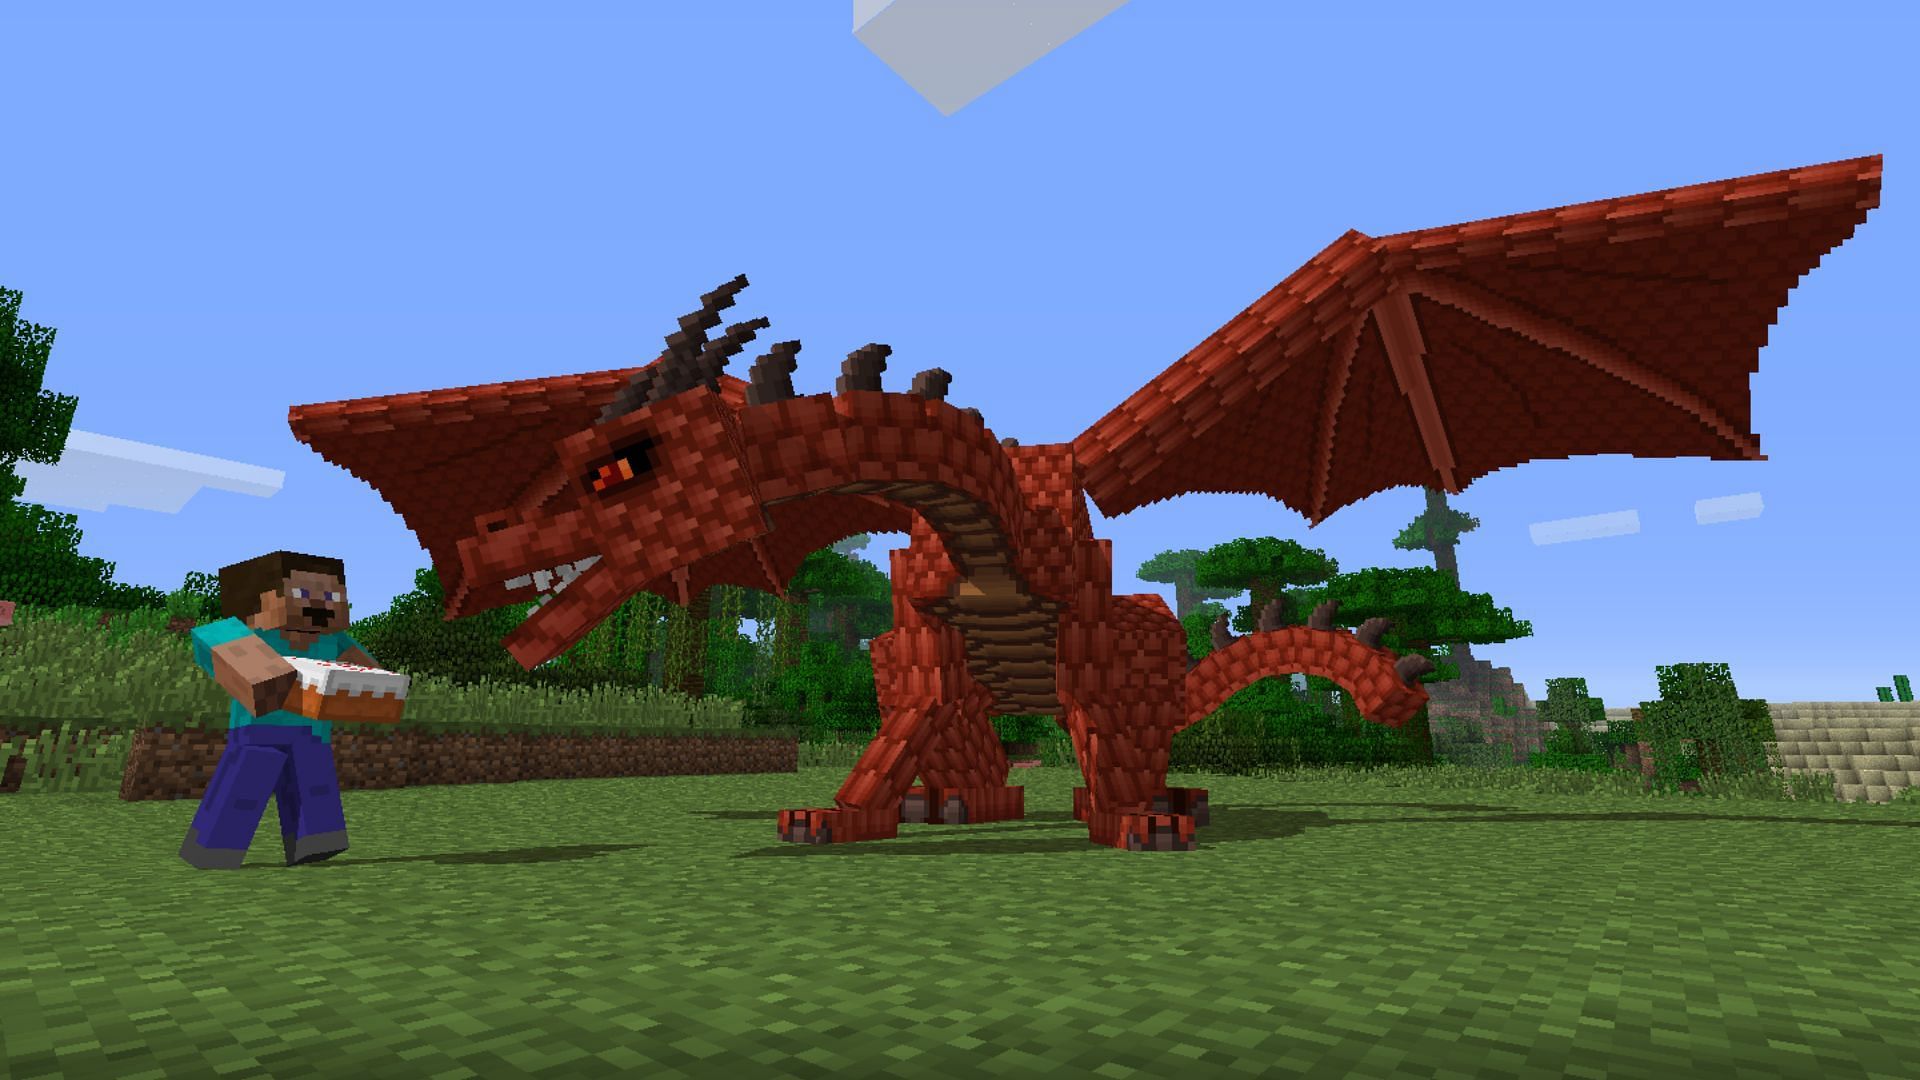 A Red Dragon mod based on the concept (Image via ShadowWolf1203/minecraftforum)